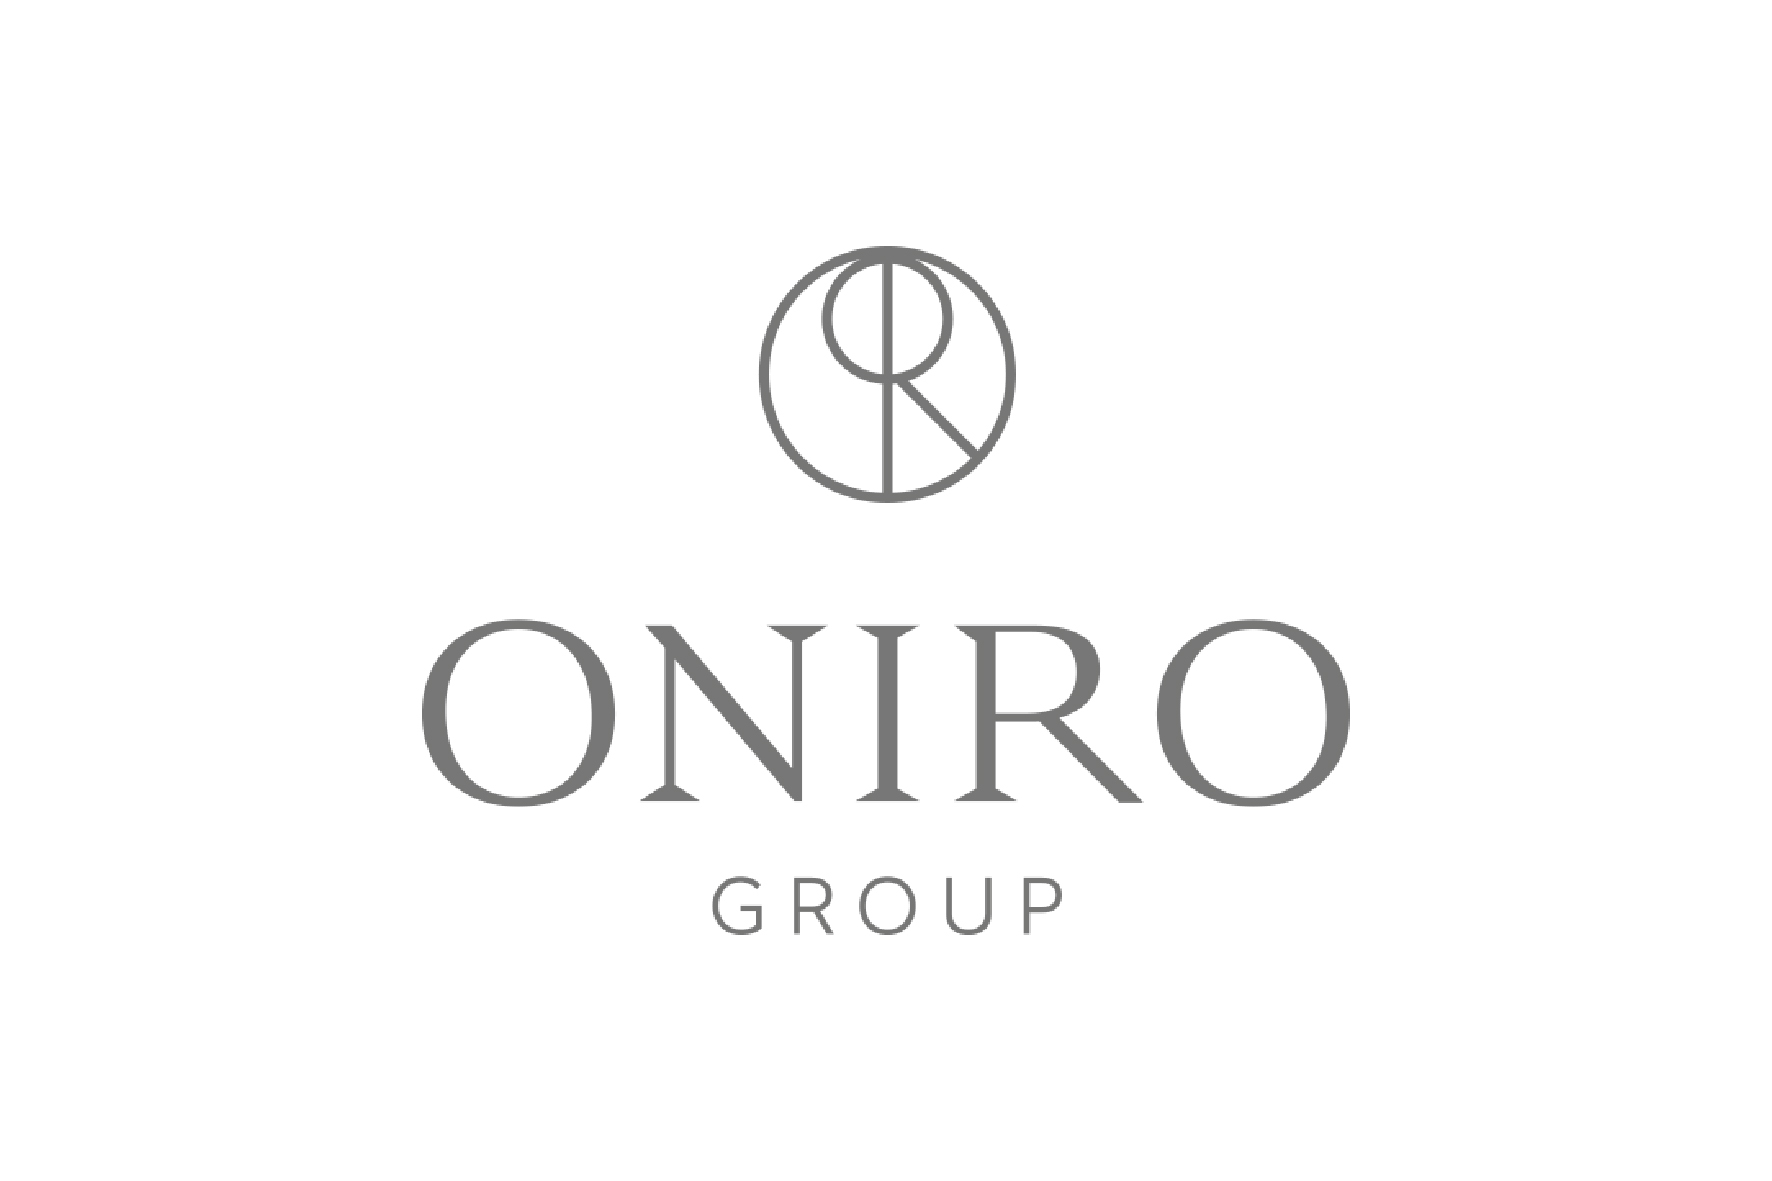 ONIRO GROUP DESIGN